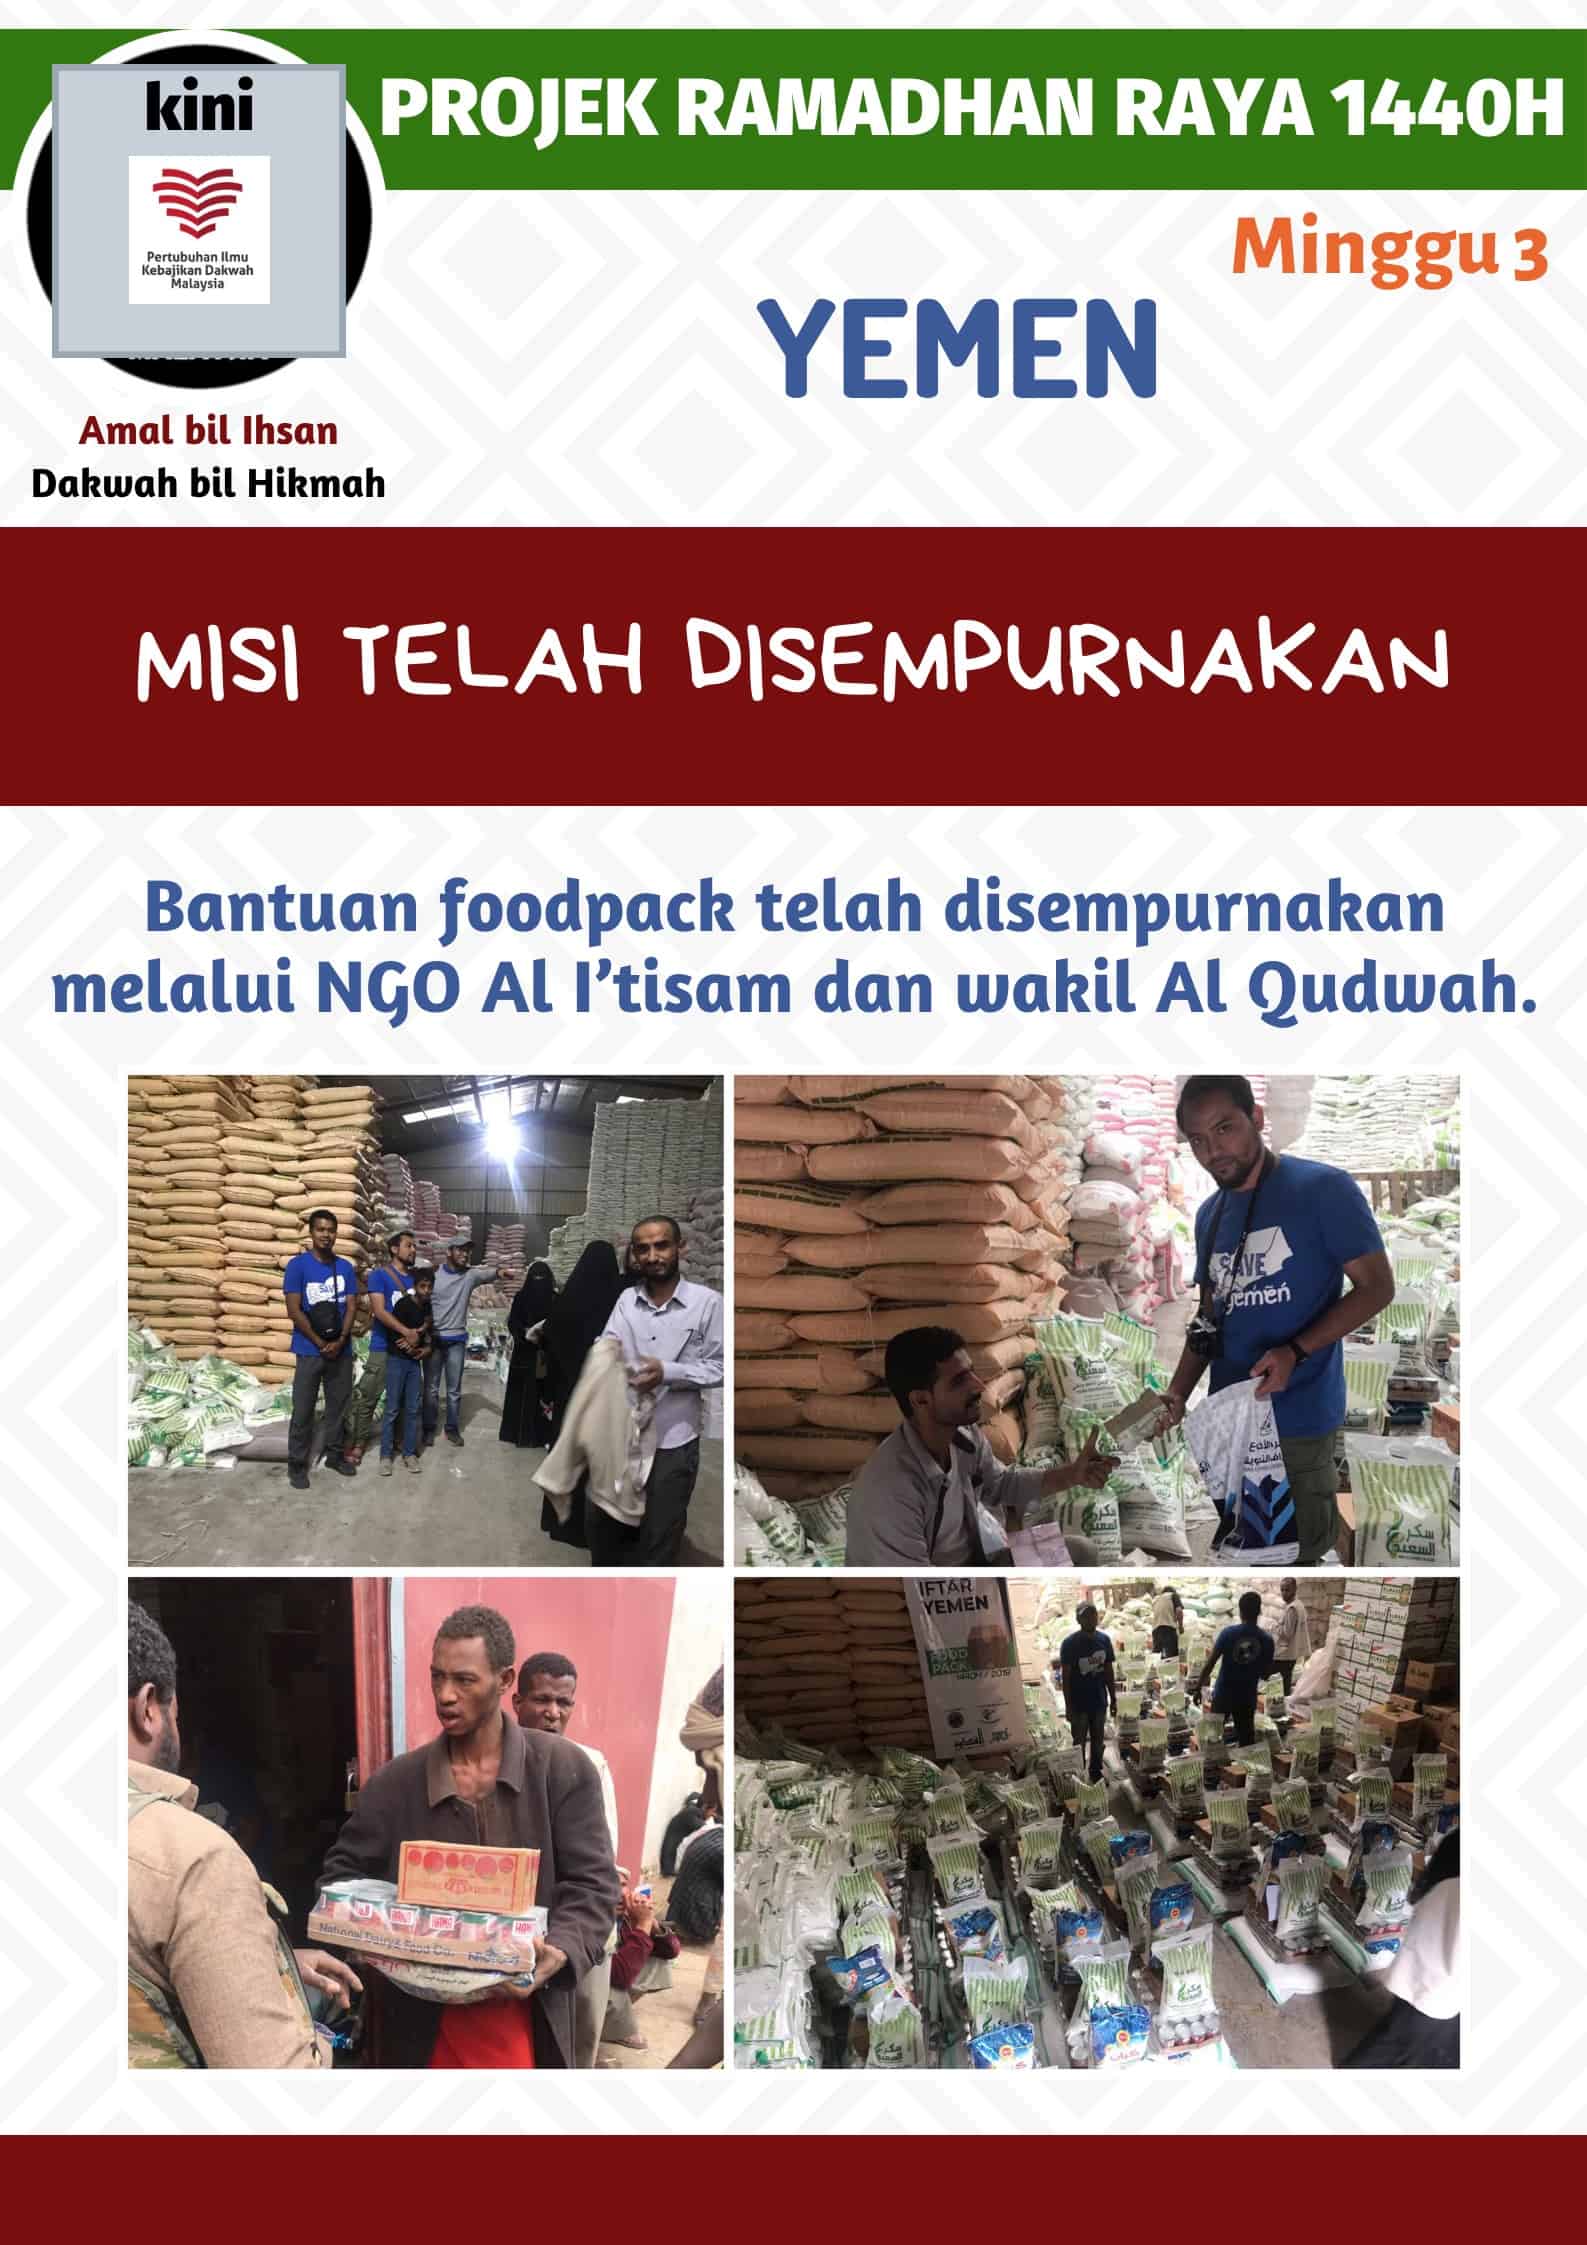 You are currently viewing Yemen (Projek Ramadhan Raya 1440H)